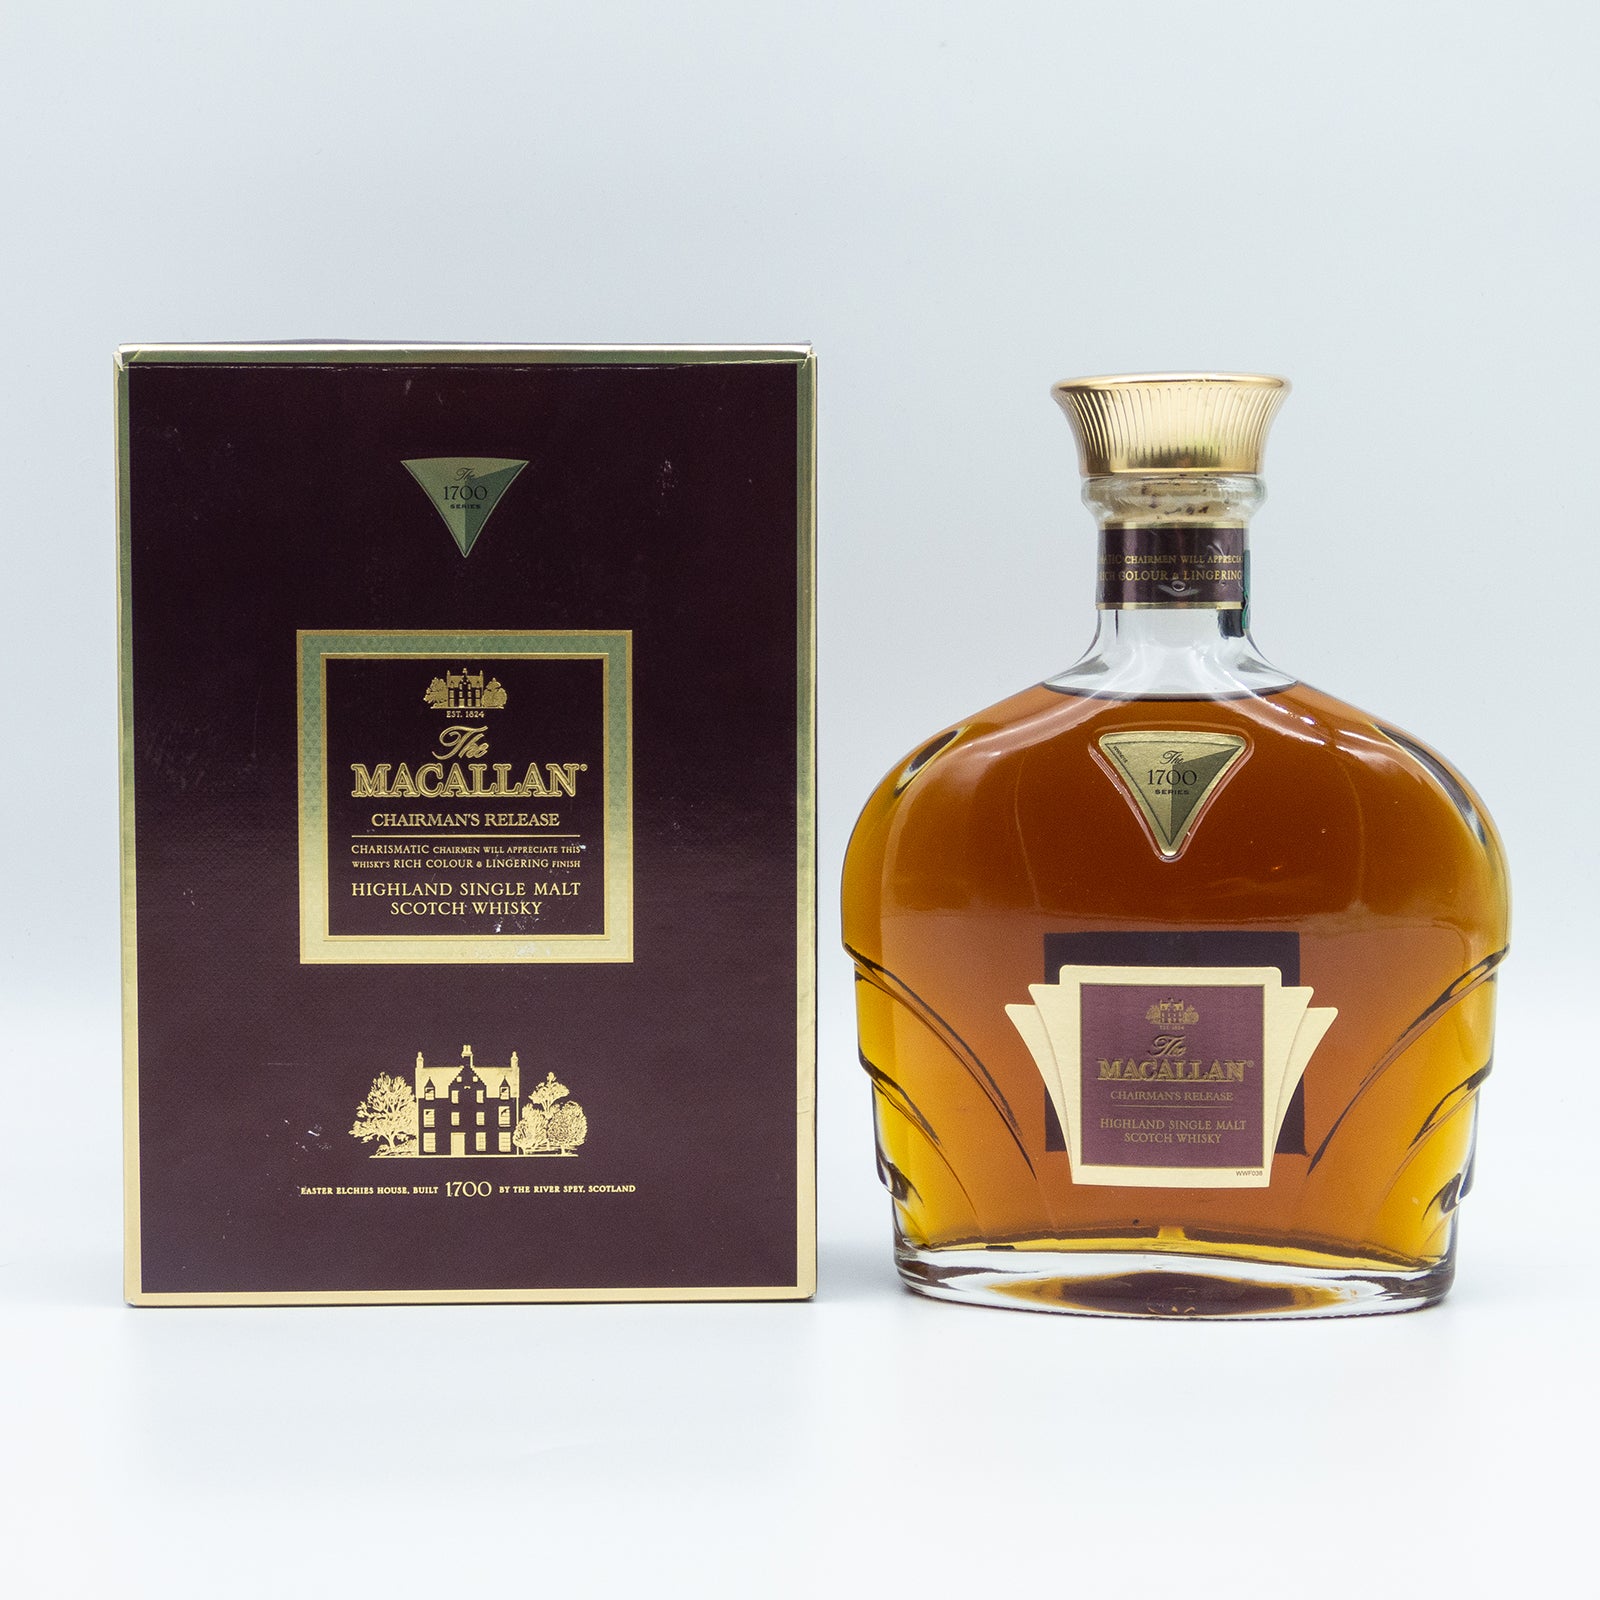 Macallan Chairman's Release Series 1700 Highland Single Malt Scotch Whisky